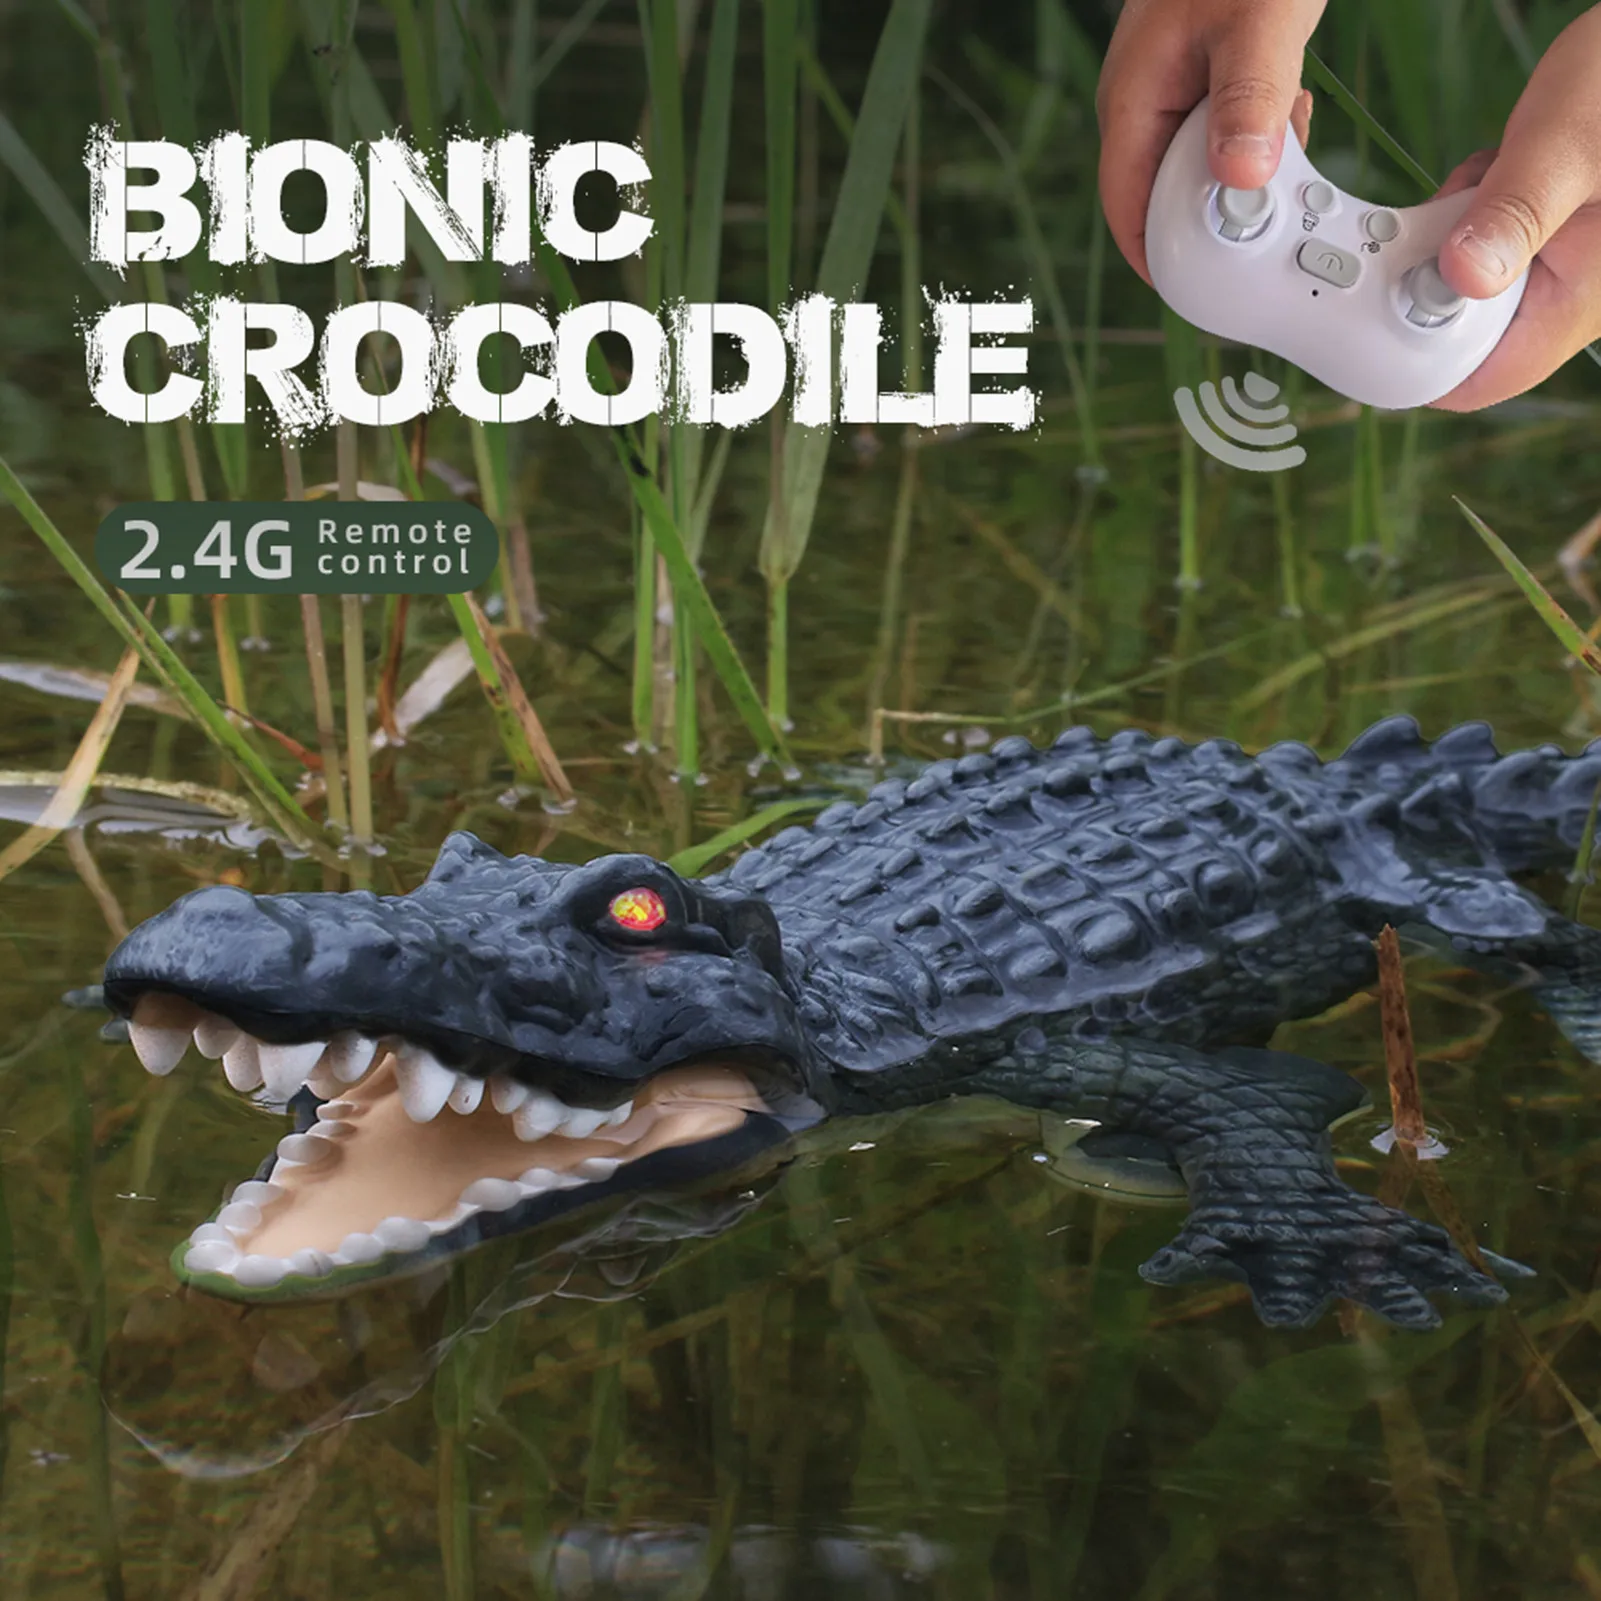 

2.4G RC Crocodile Electric Remote Control Alligator Boats Waterproof Crocodile Remote Control Toy for Kids Summer Water Fun Toy